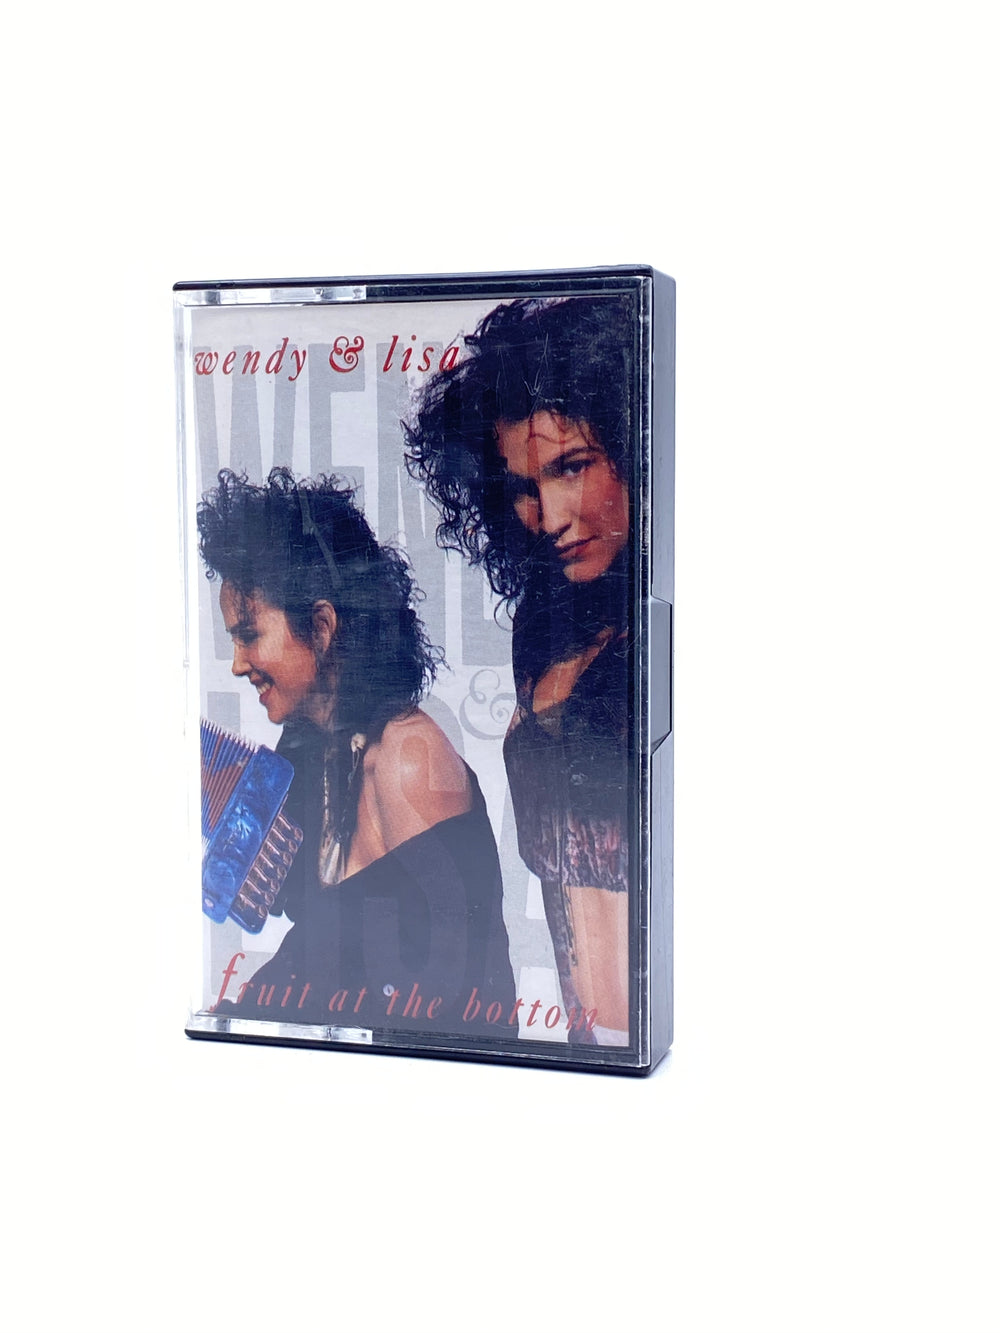 Prince – Wendy & Lisa Fruit At the Bottom Cassette Album UK Preloved: 1989